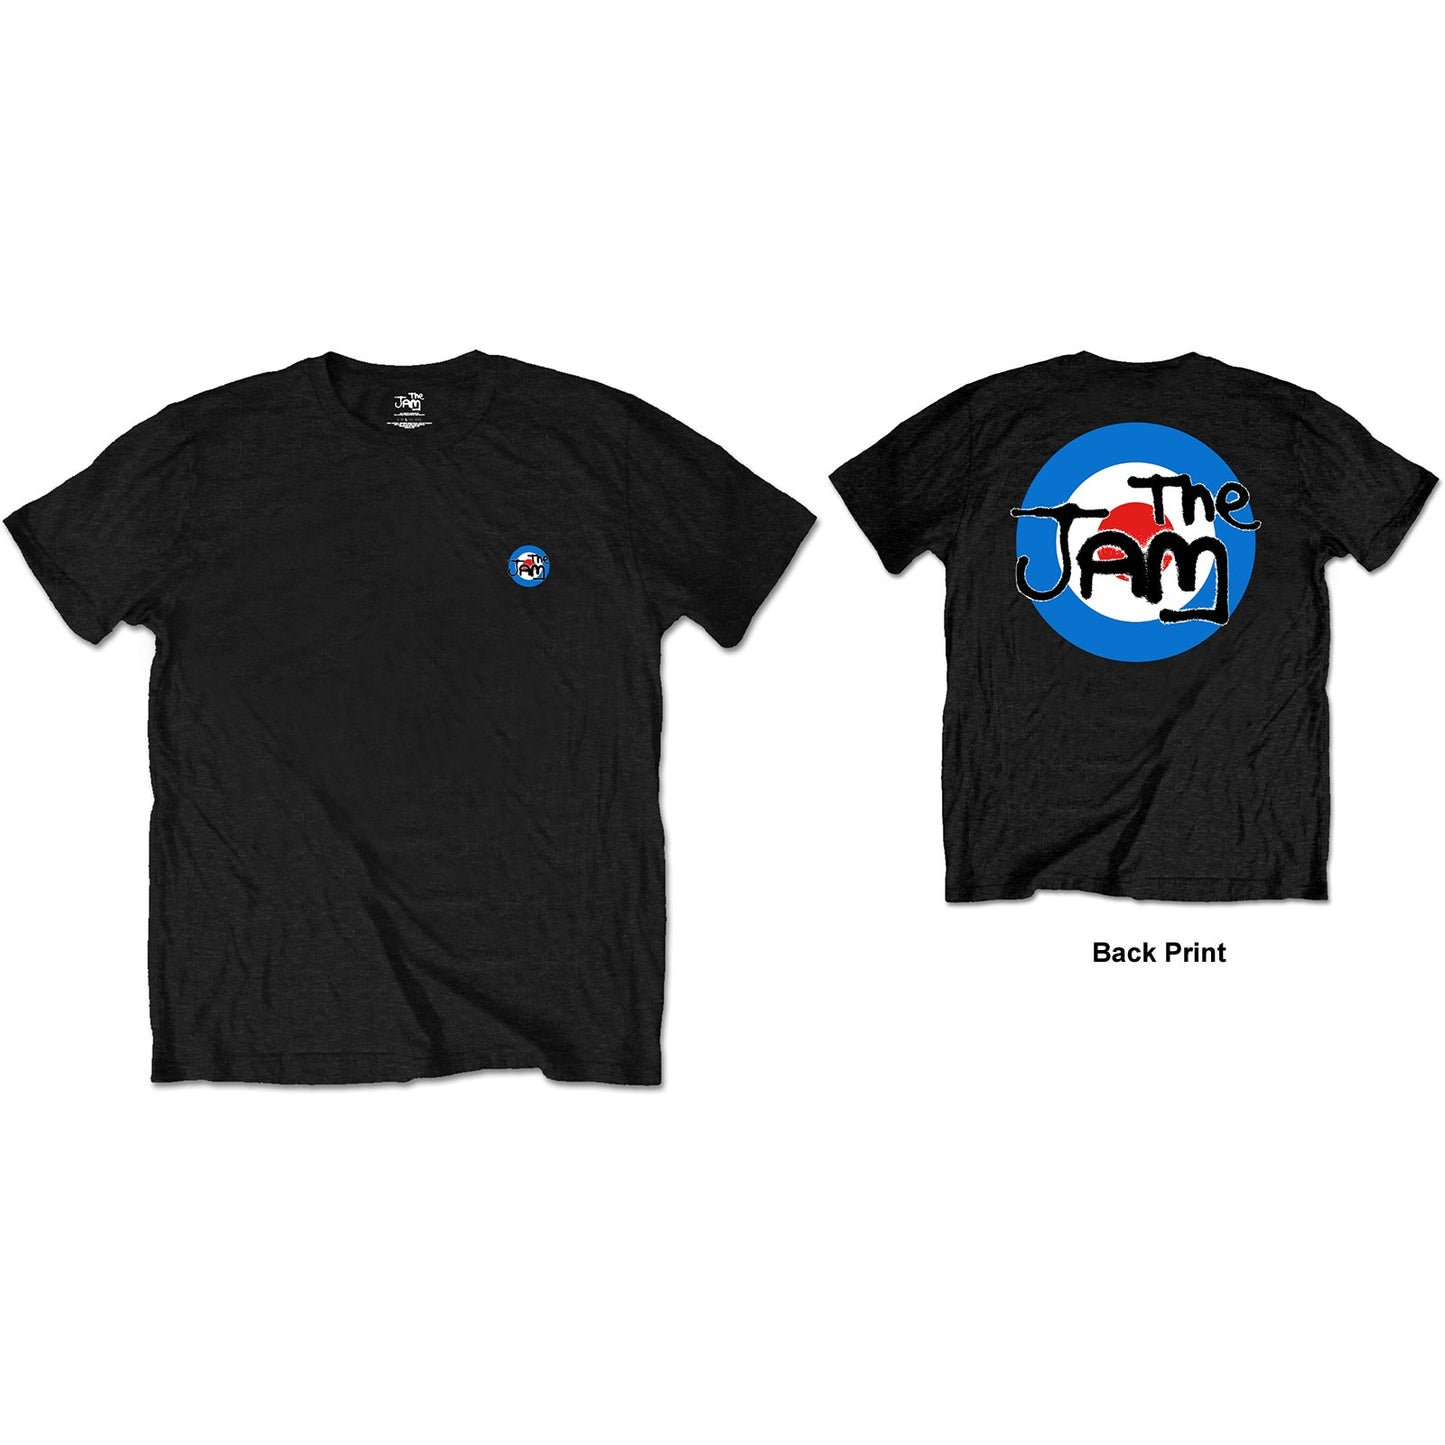 JAM - Spray Target Logo Black (Backprint) T-Shirt